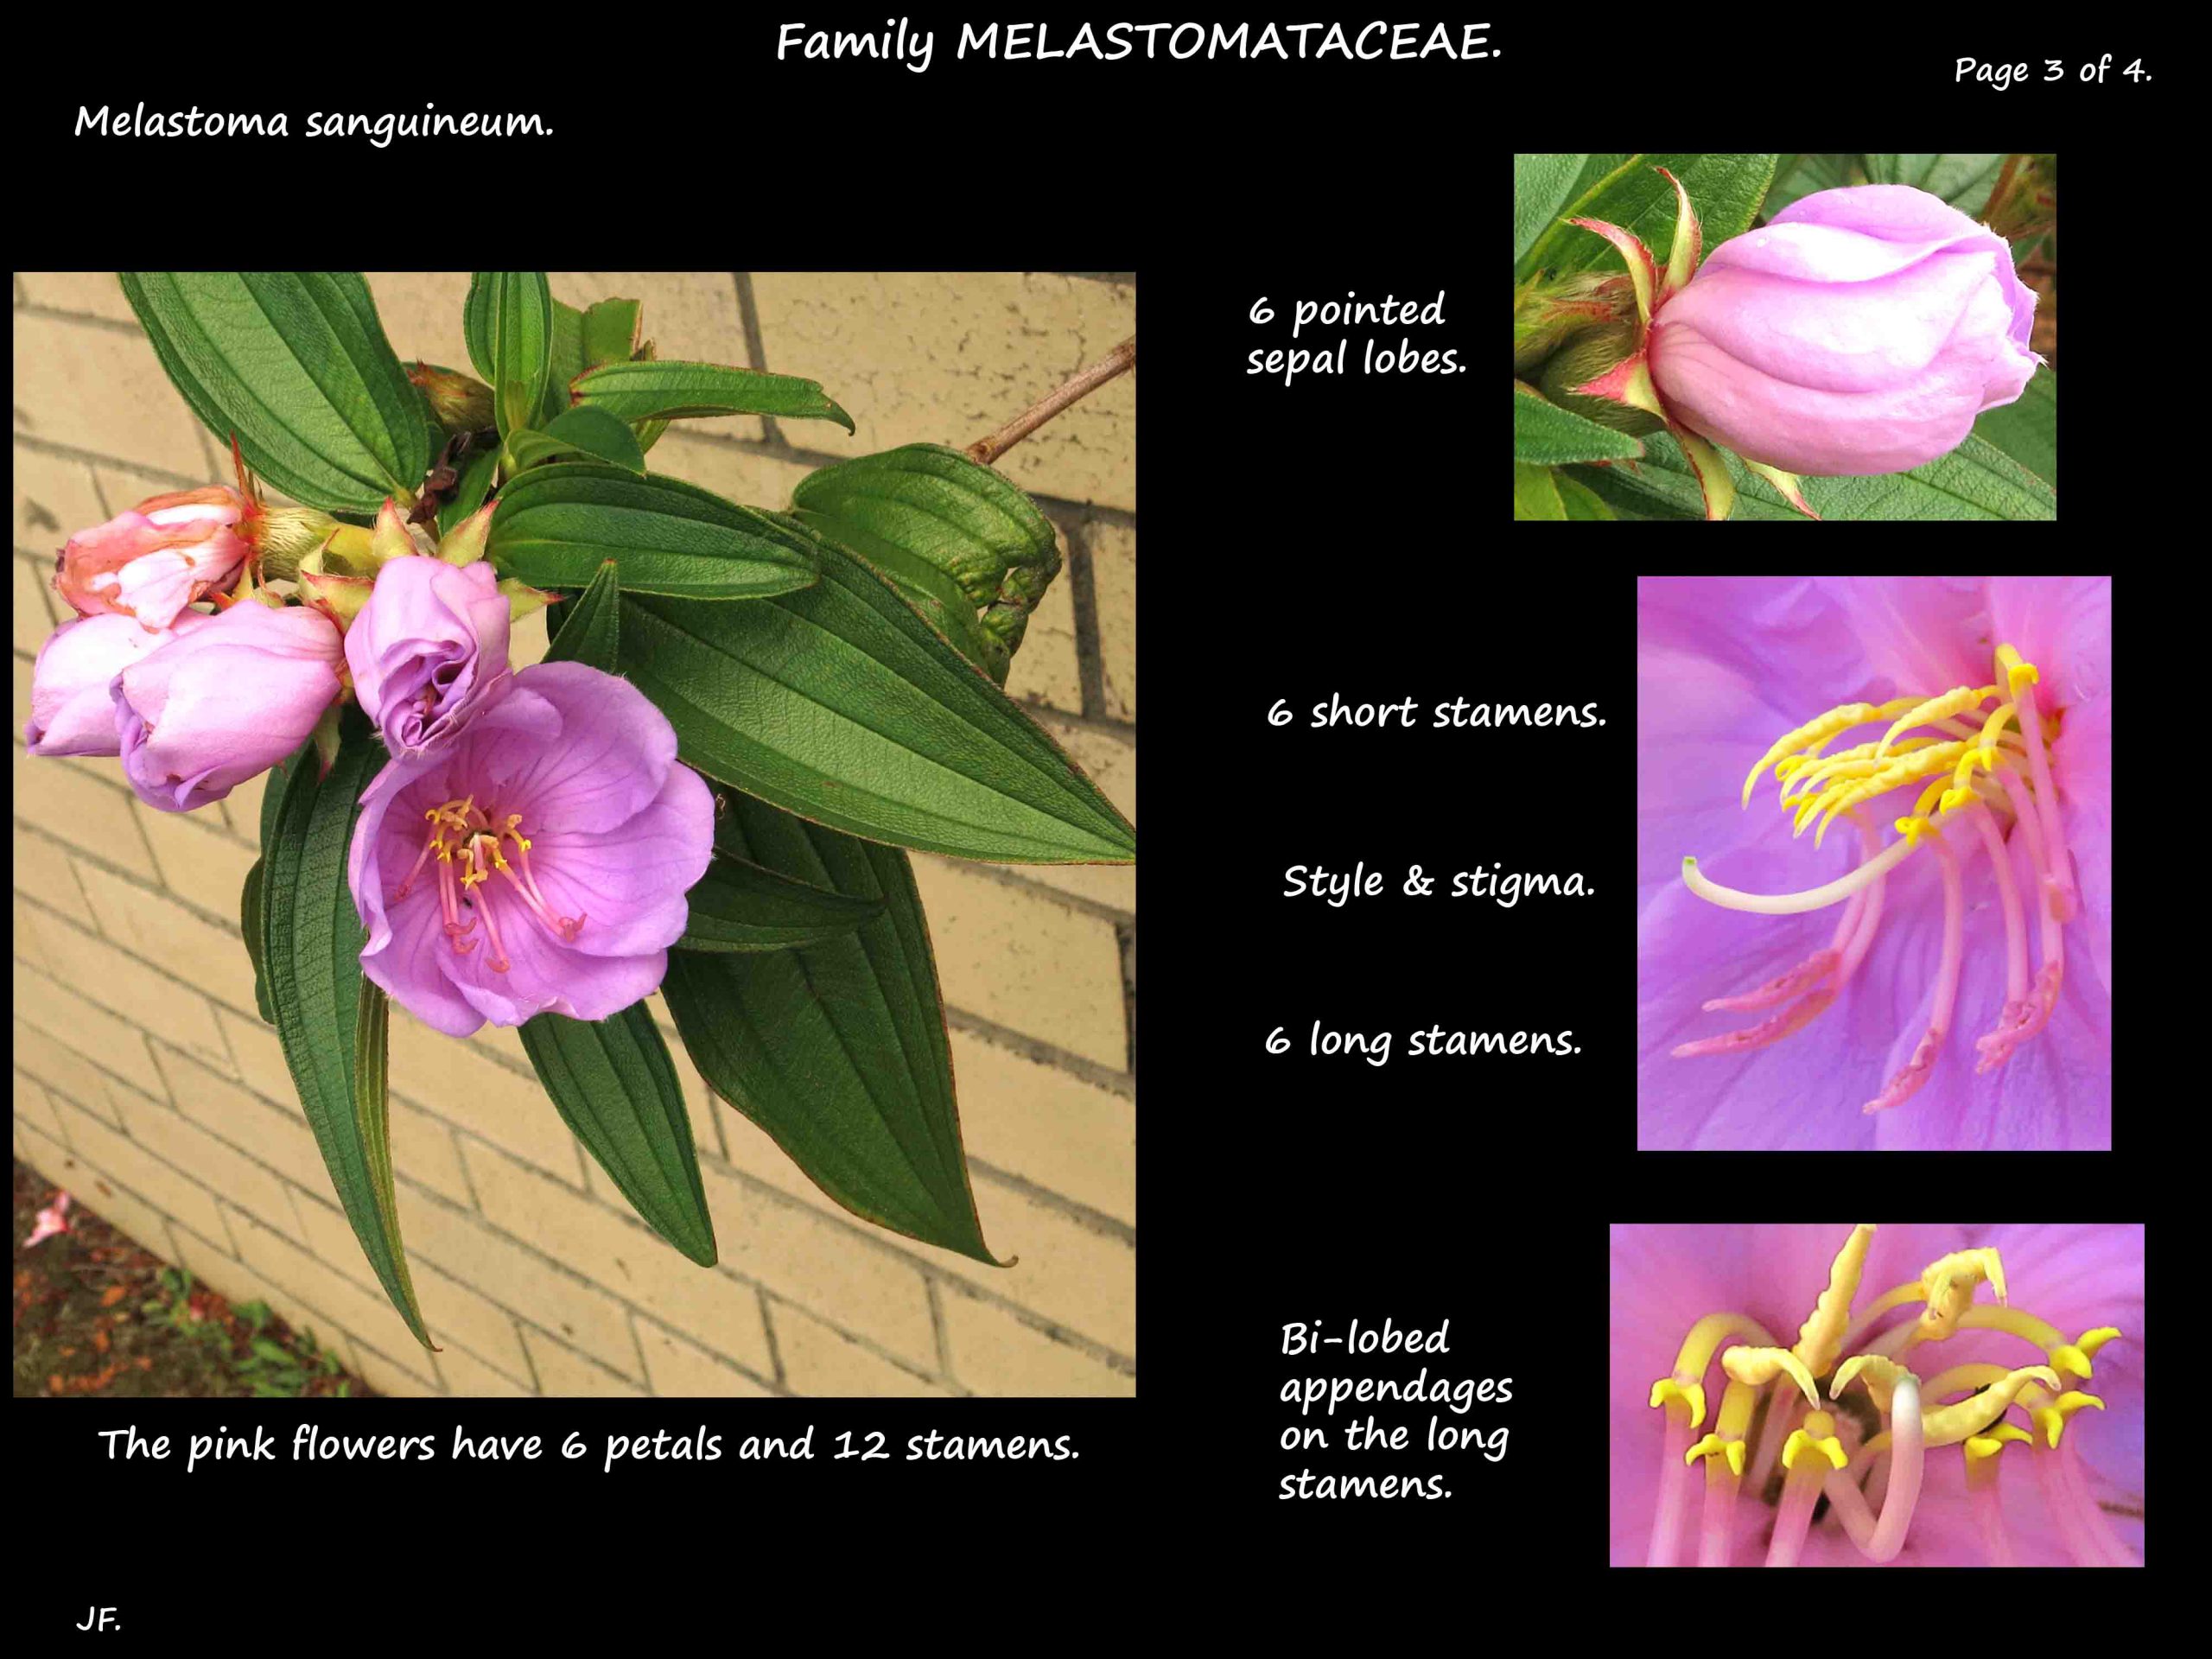 3 Melastoma sanguineum flowers